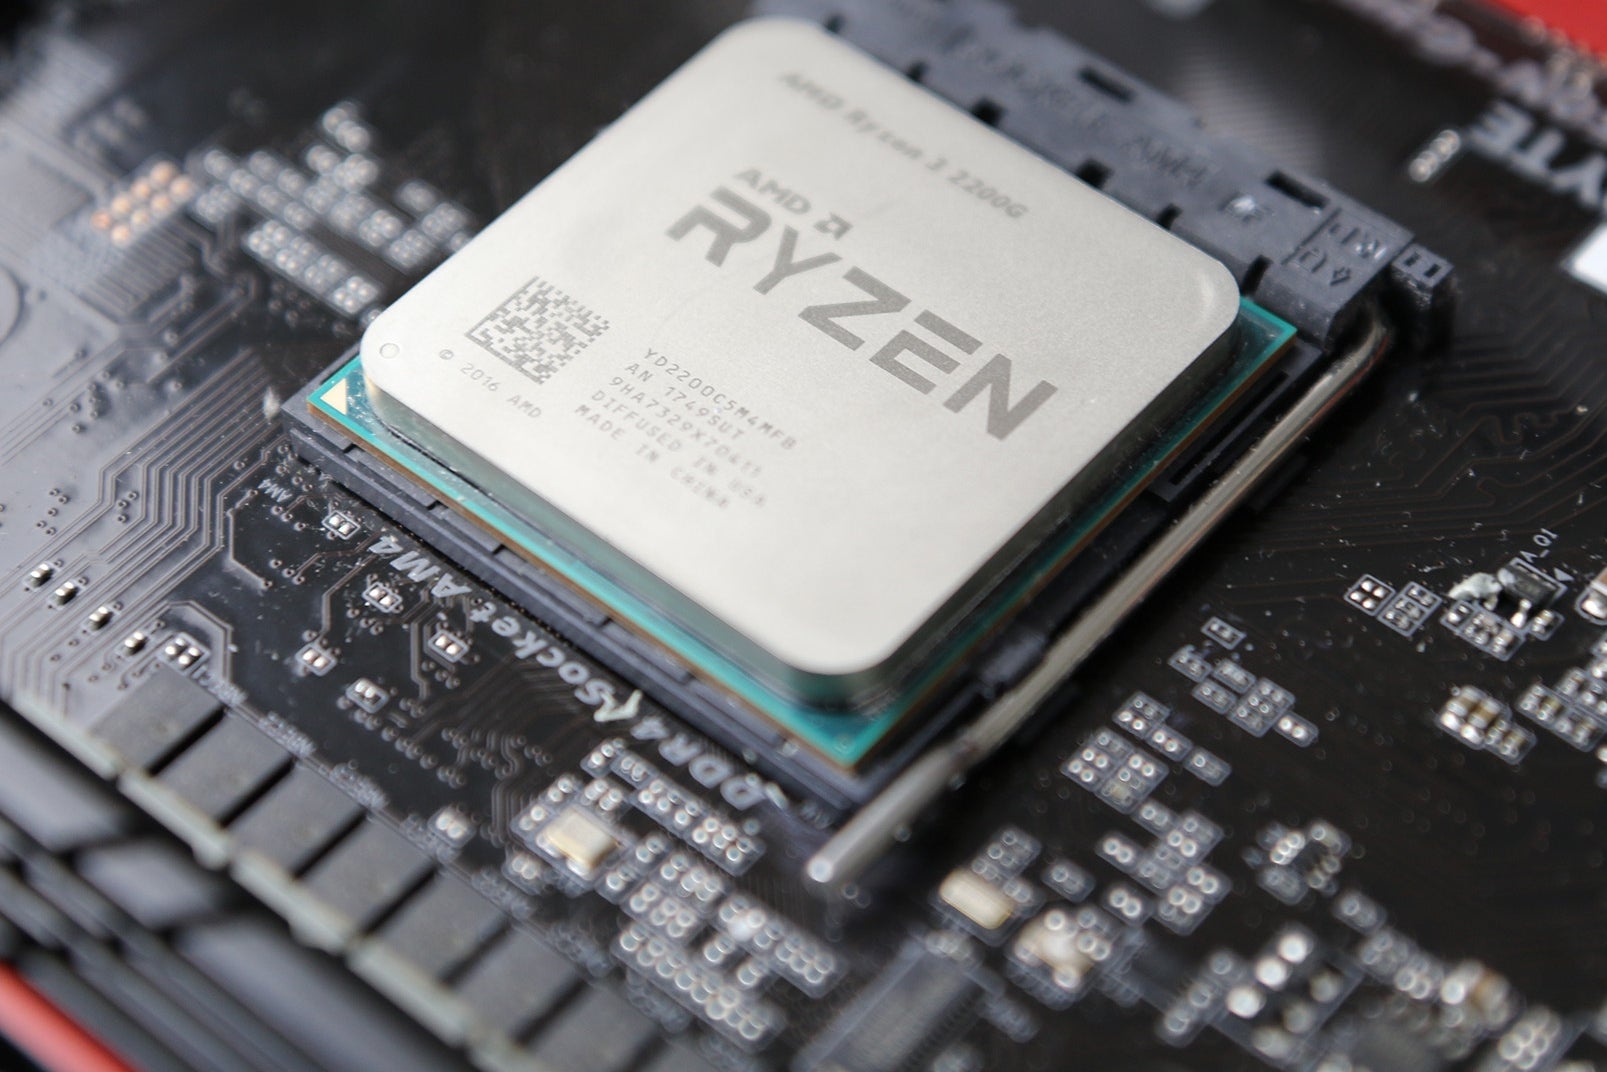 Ryzen 3 2200G/ Ryzen 5 2400G review: triple-A gaming without